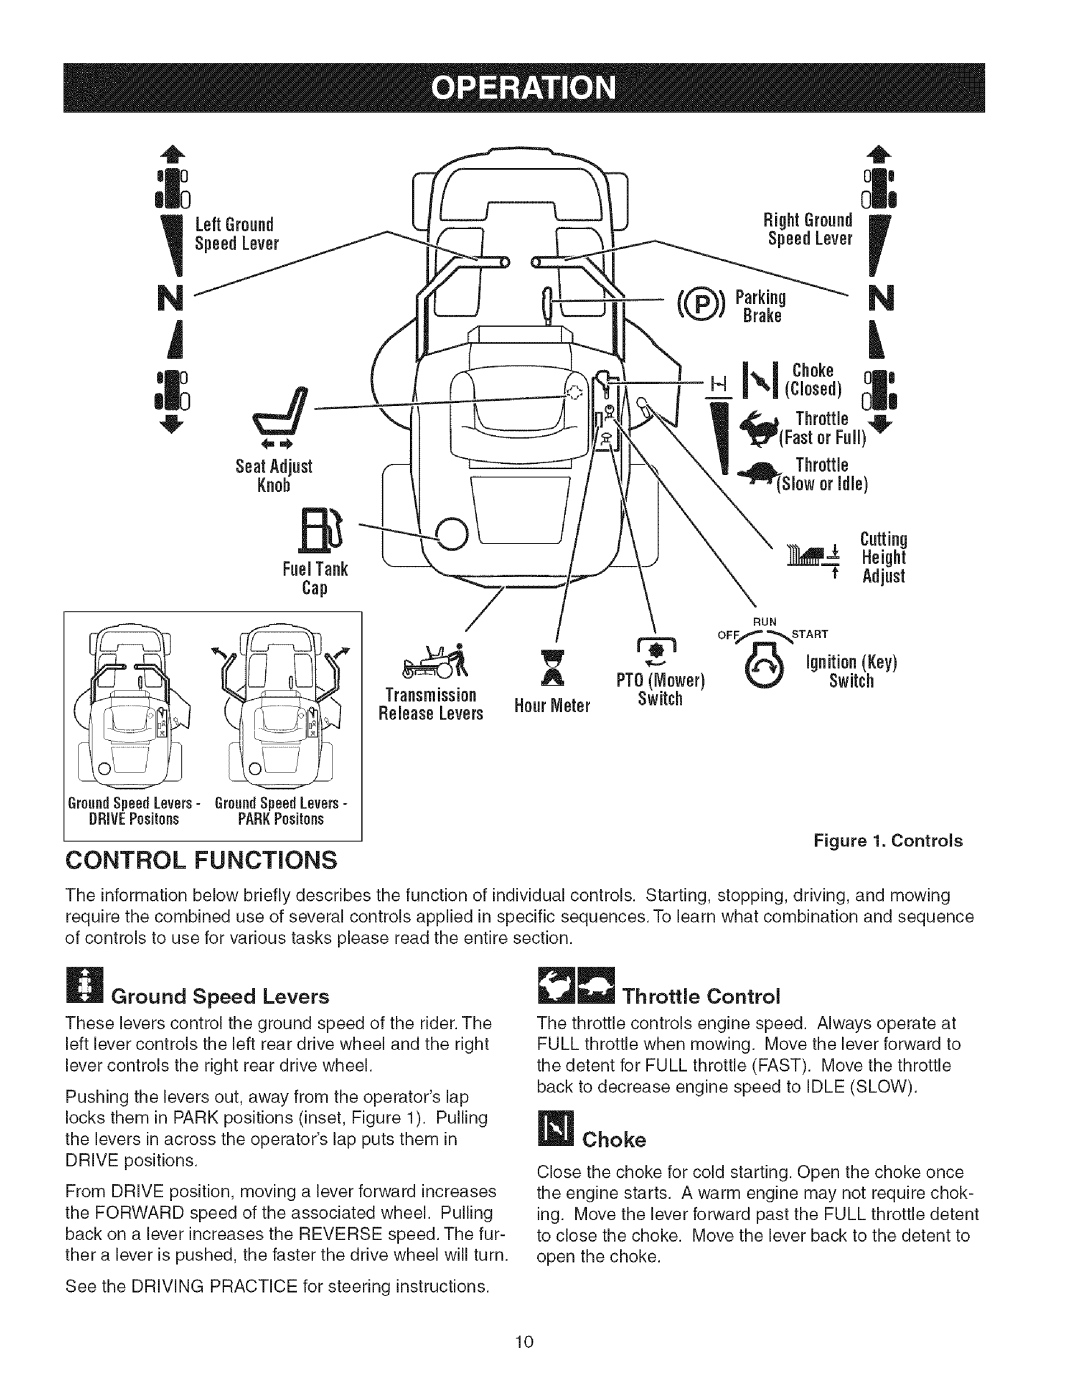 Craftsman 107.2777 manual Control Functions, Choke, _Left, SpeedLever, RightGround, Parking, Brake, Controls 